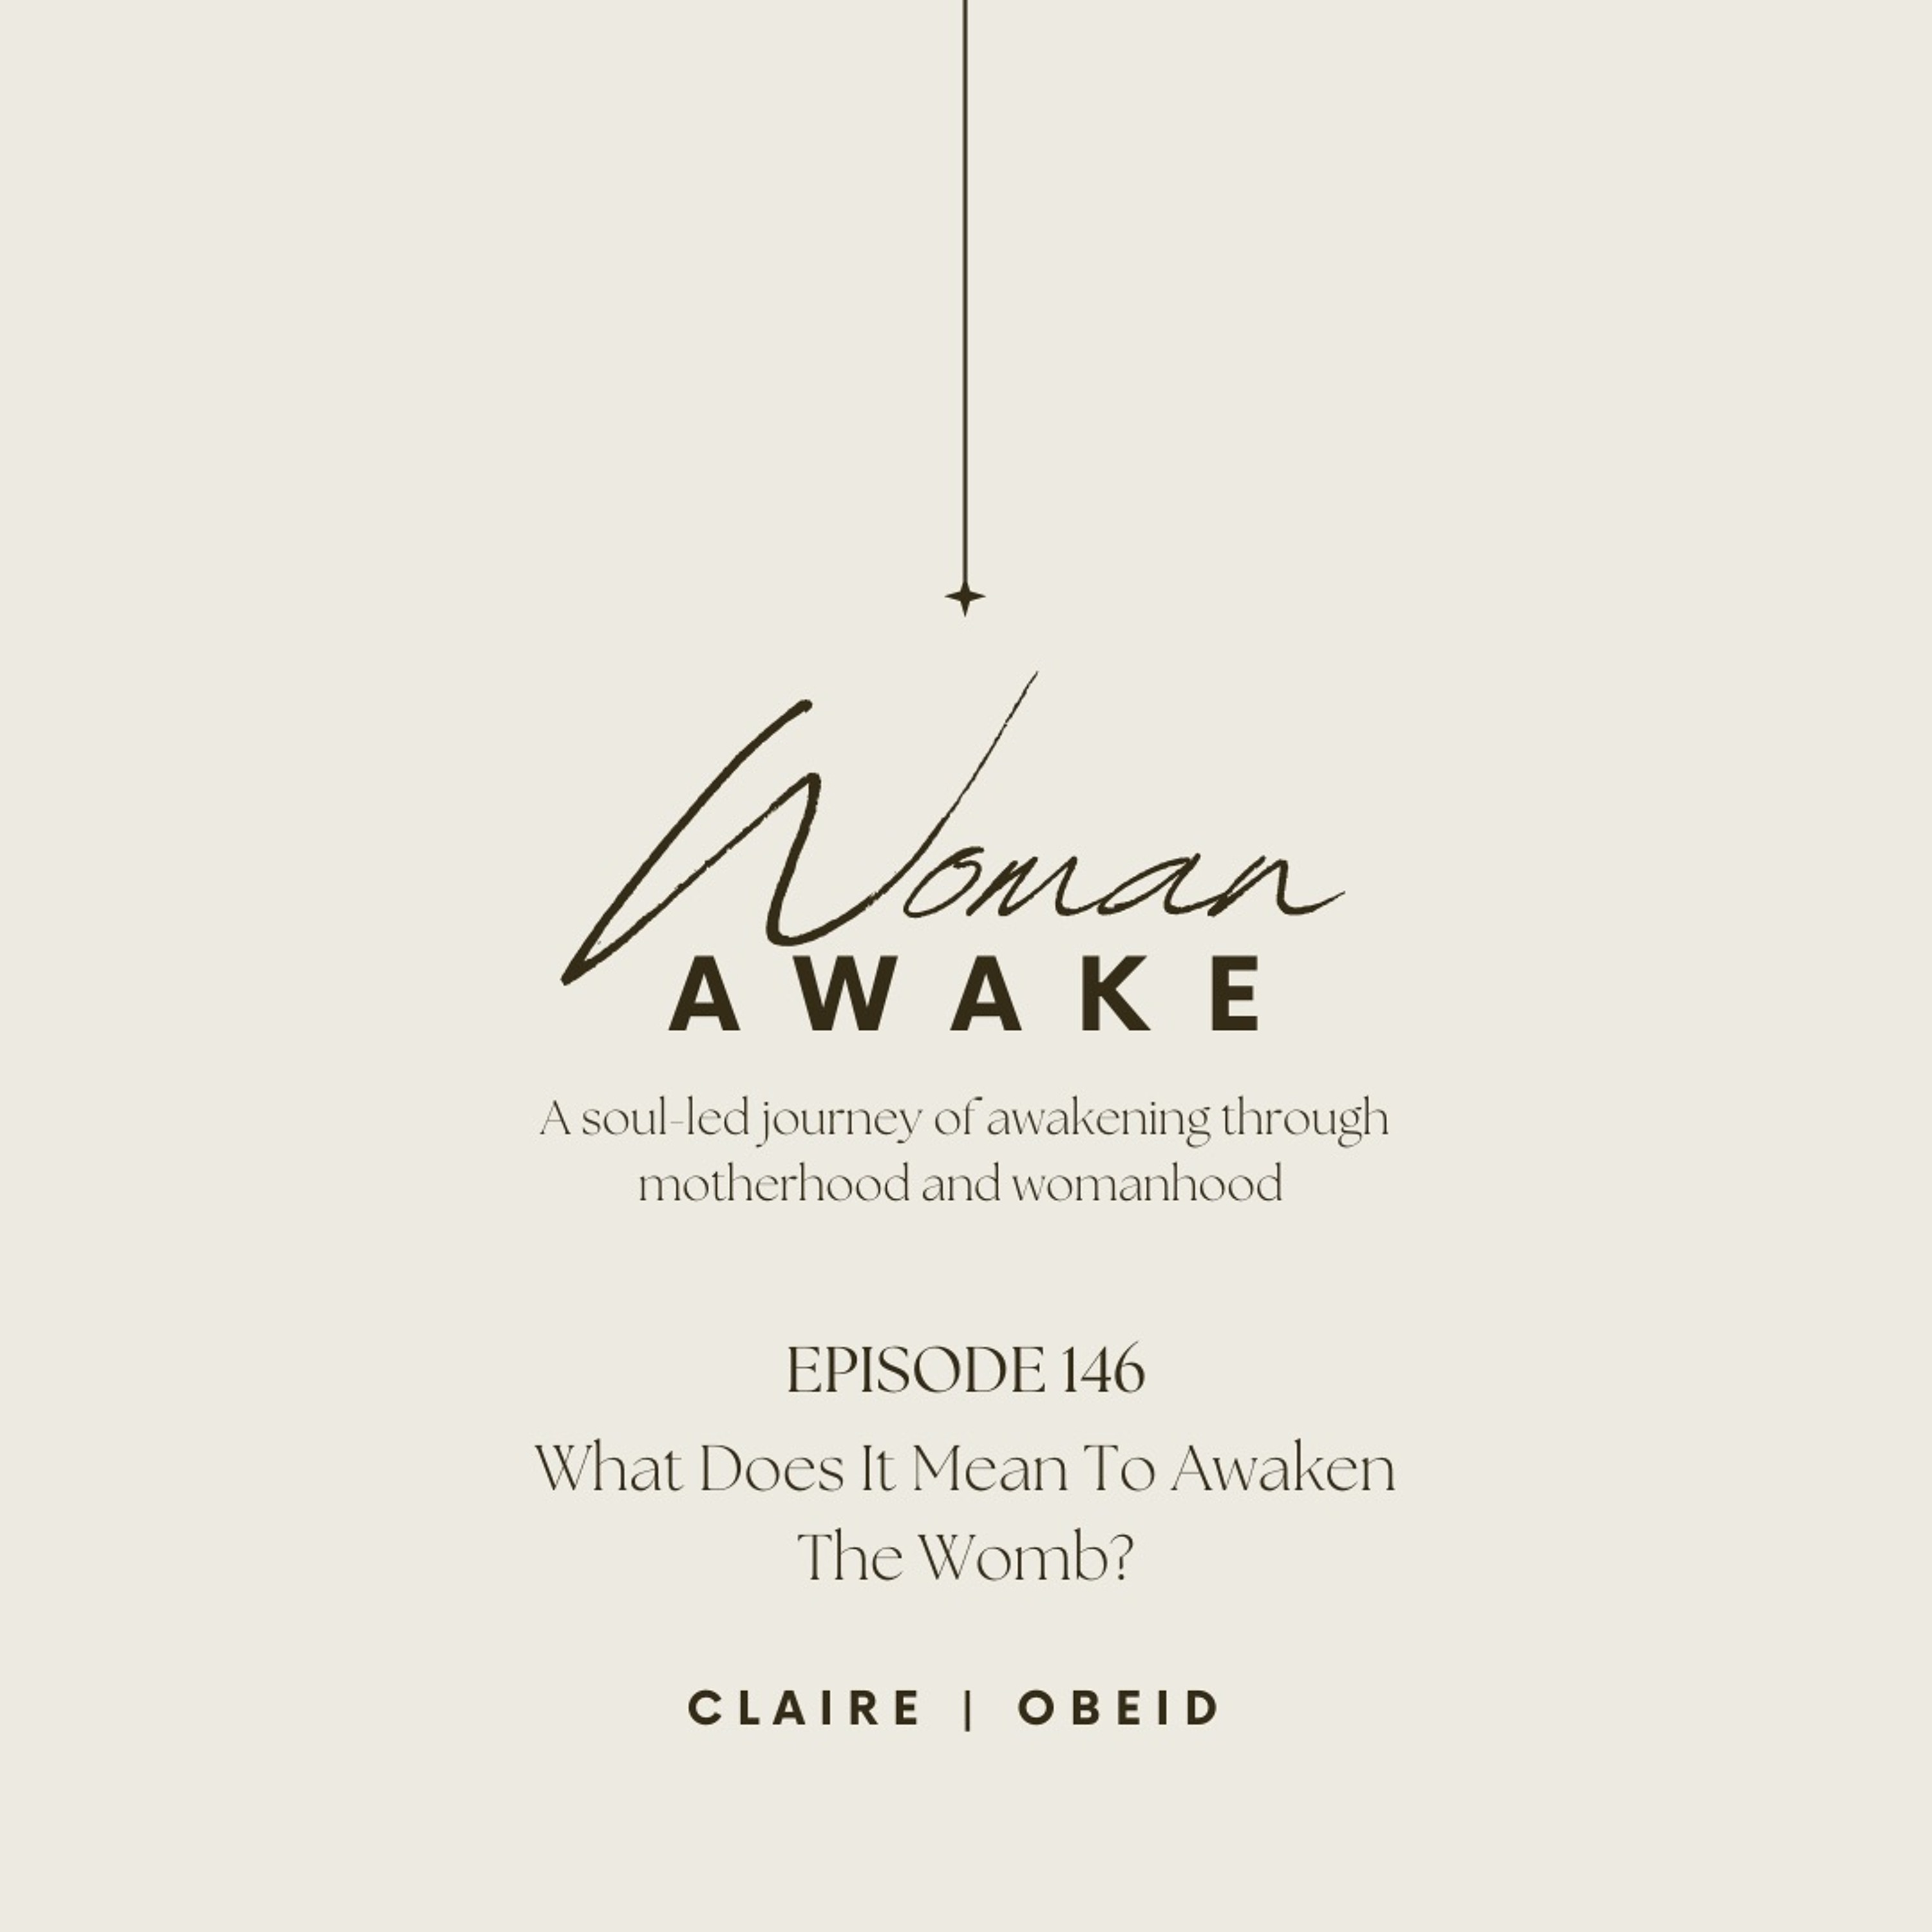 Woman Awake Episode 146 - What Does It Mean To Awaken The Womb?